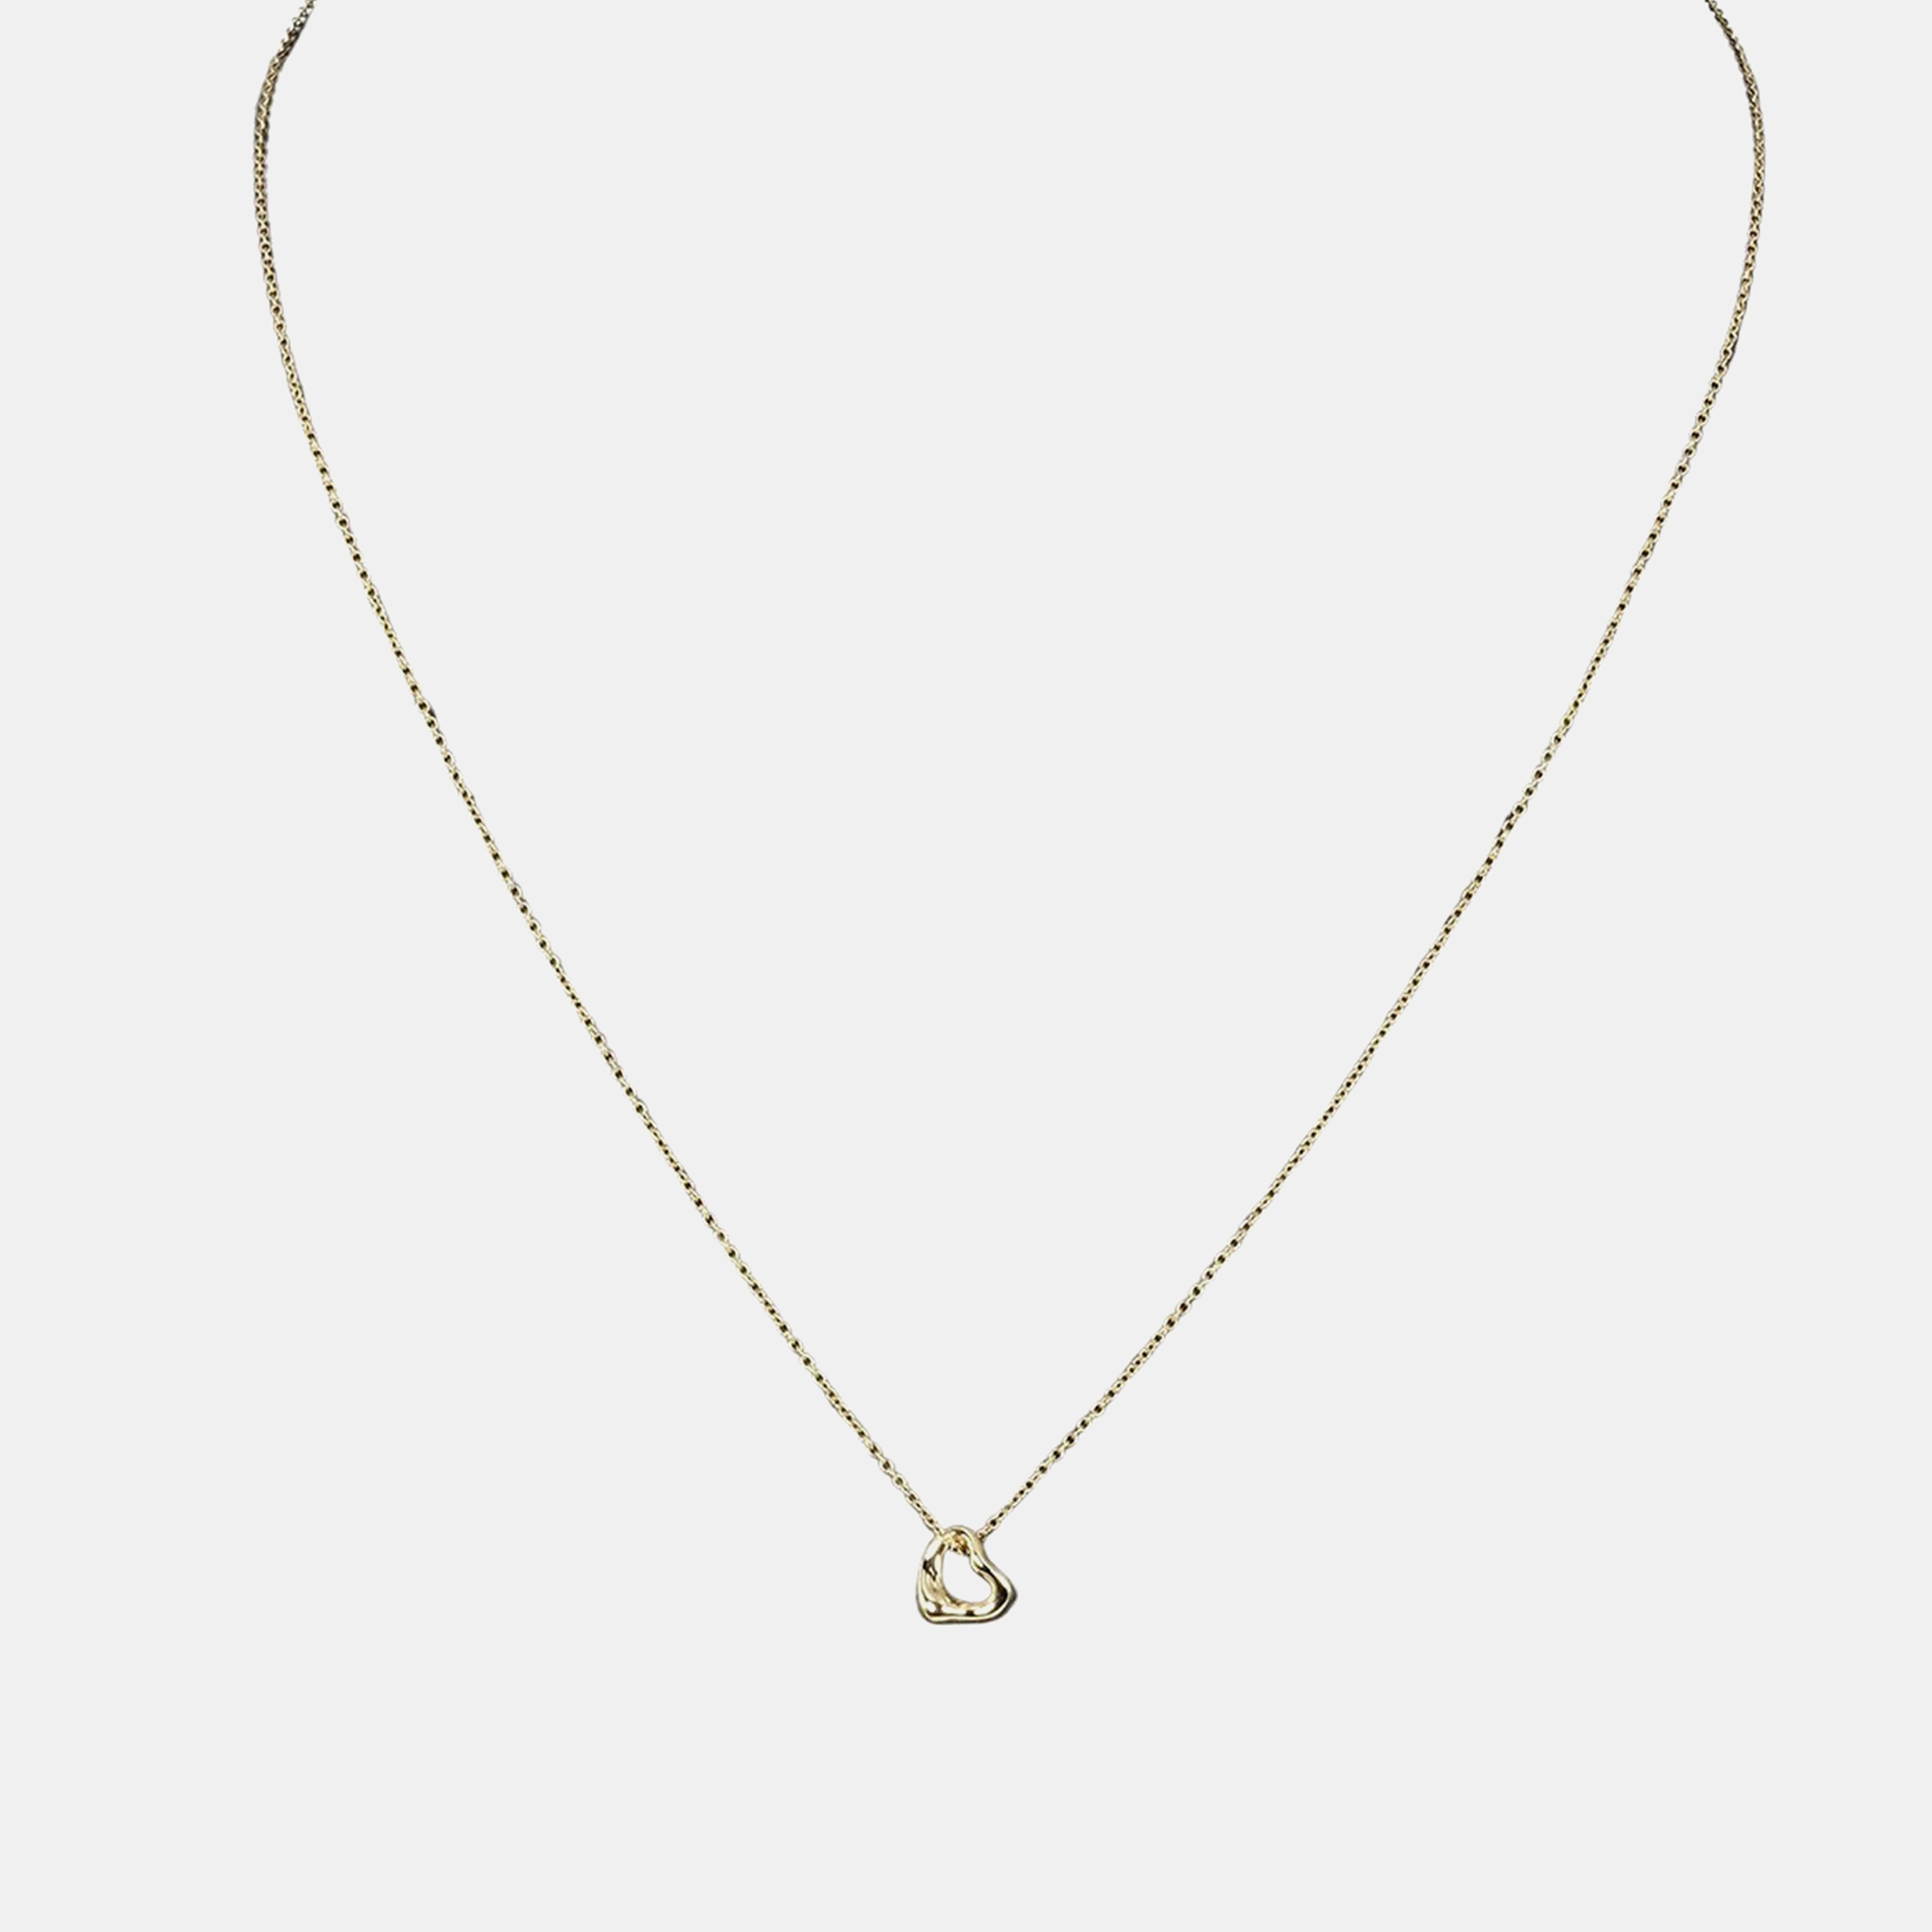 Tiffany & co. 18k yellow gold elsa peretti open heart pendant necklace